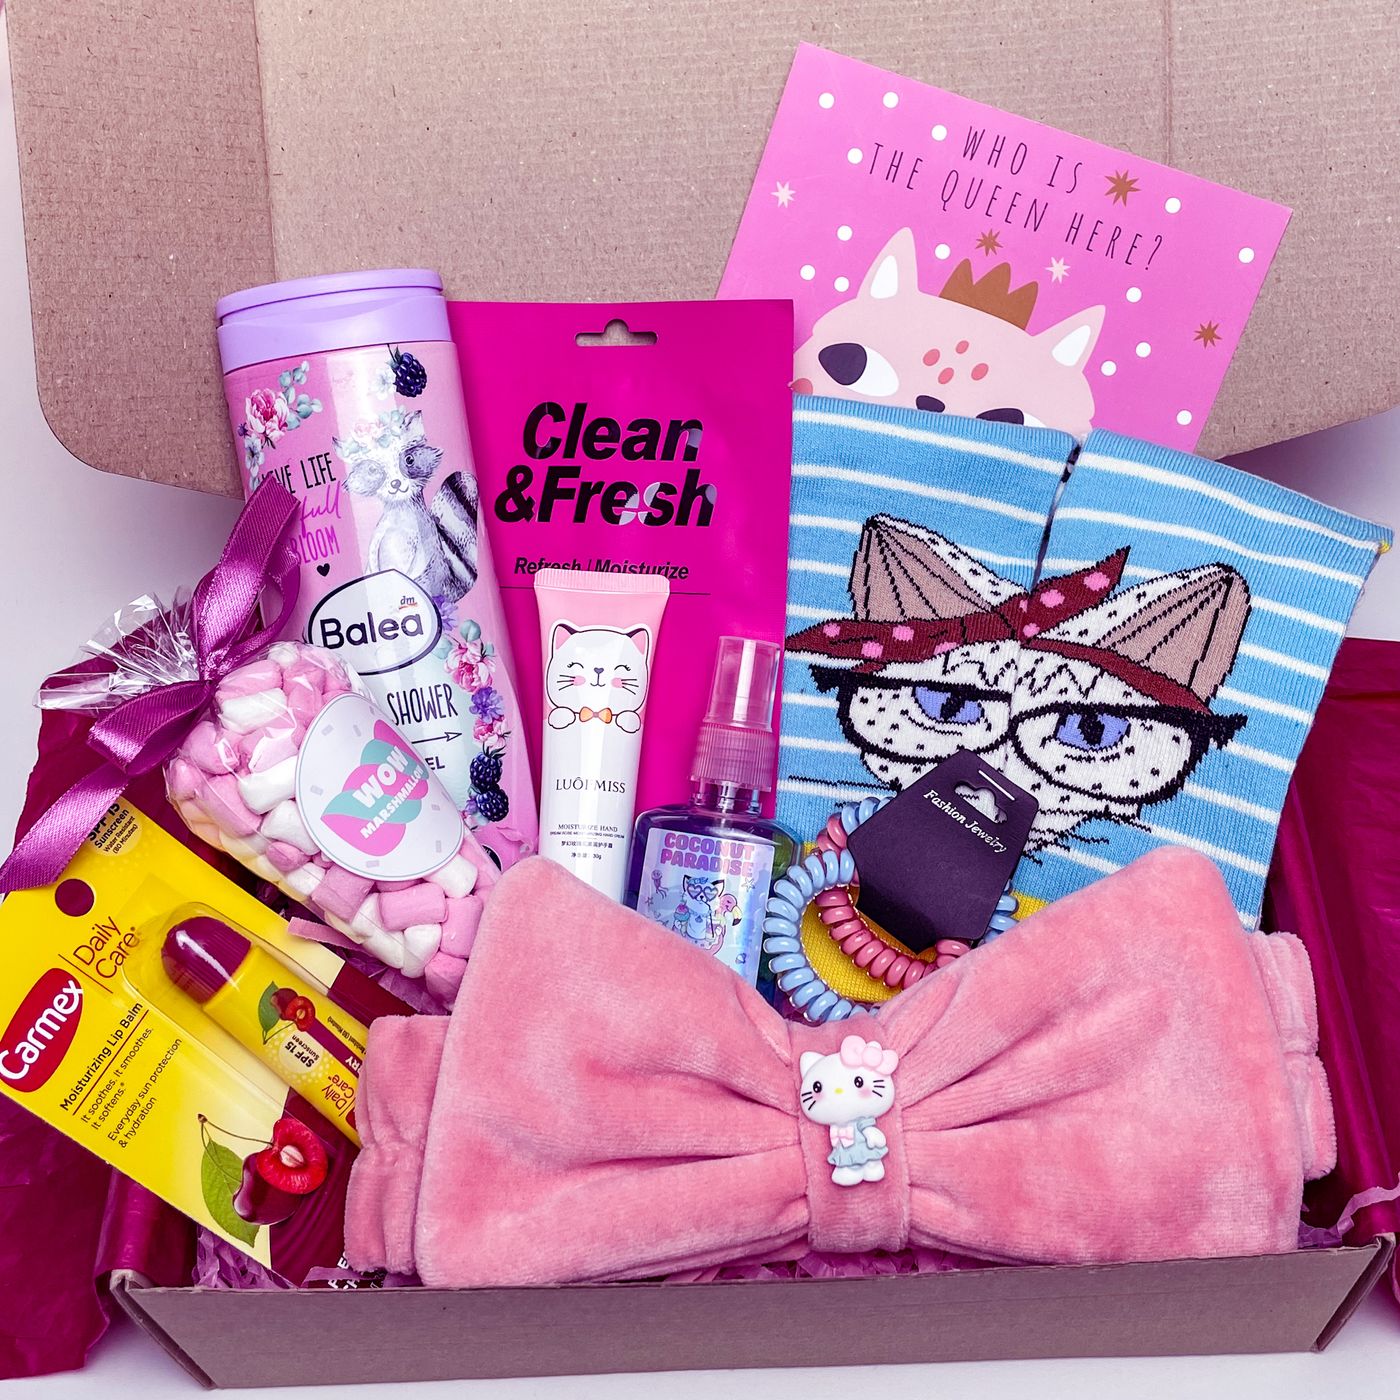 Подарочный бокс для девочки Wow Boxes "Cat Box №3"